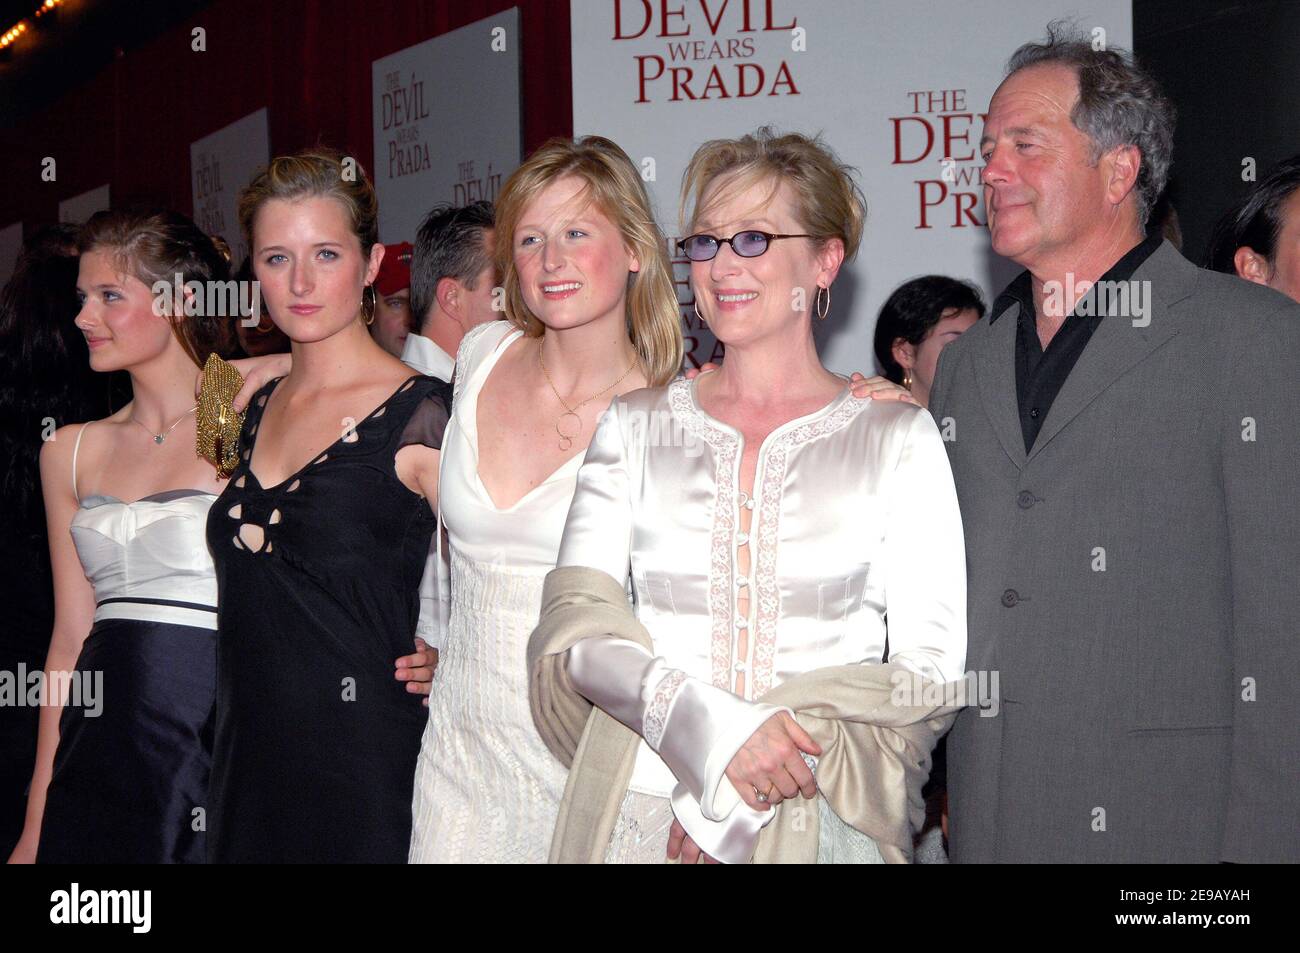 Meryl Streep Devil Wears Prada High Resolution Stock Photography And Images Alamy